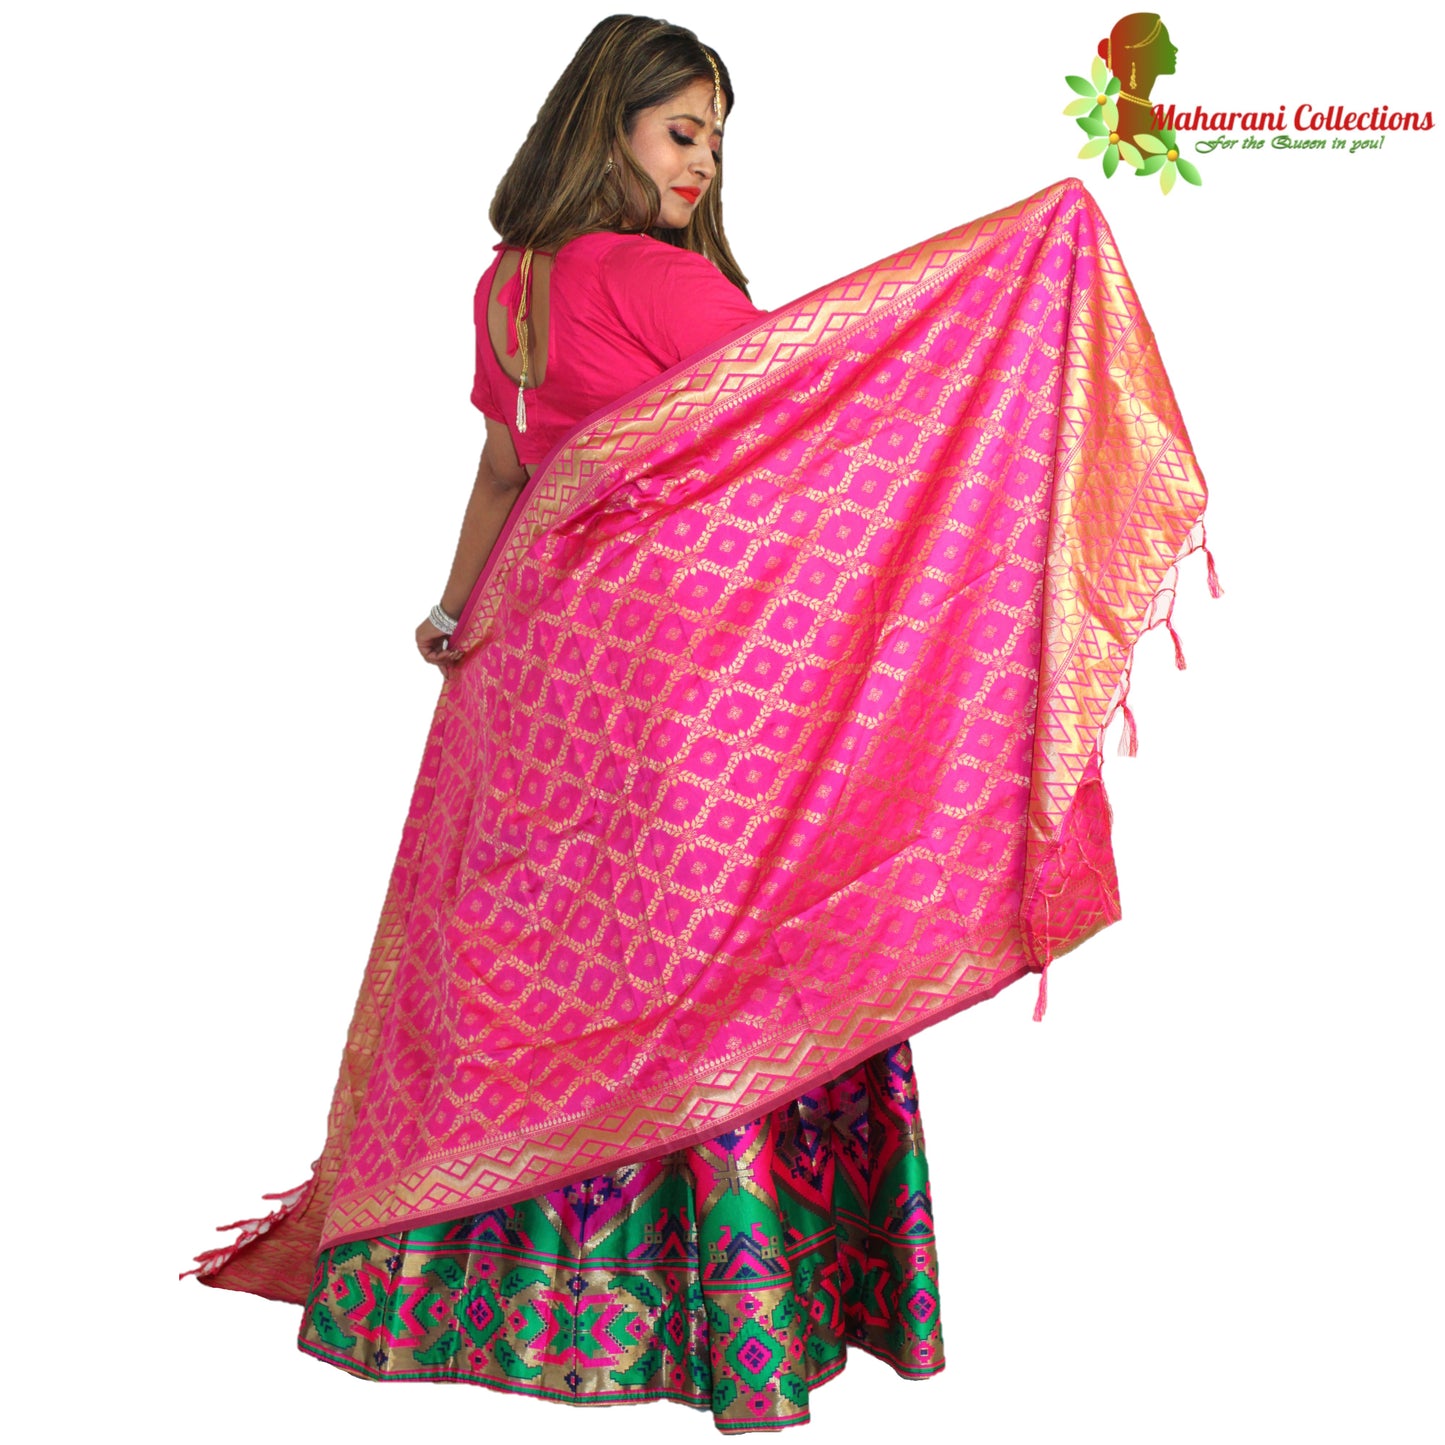 Maharani's Designer Pure Banarasi Silk Lehenga - Pink, Green and Blue (M/L)